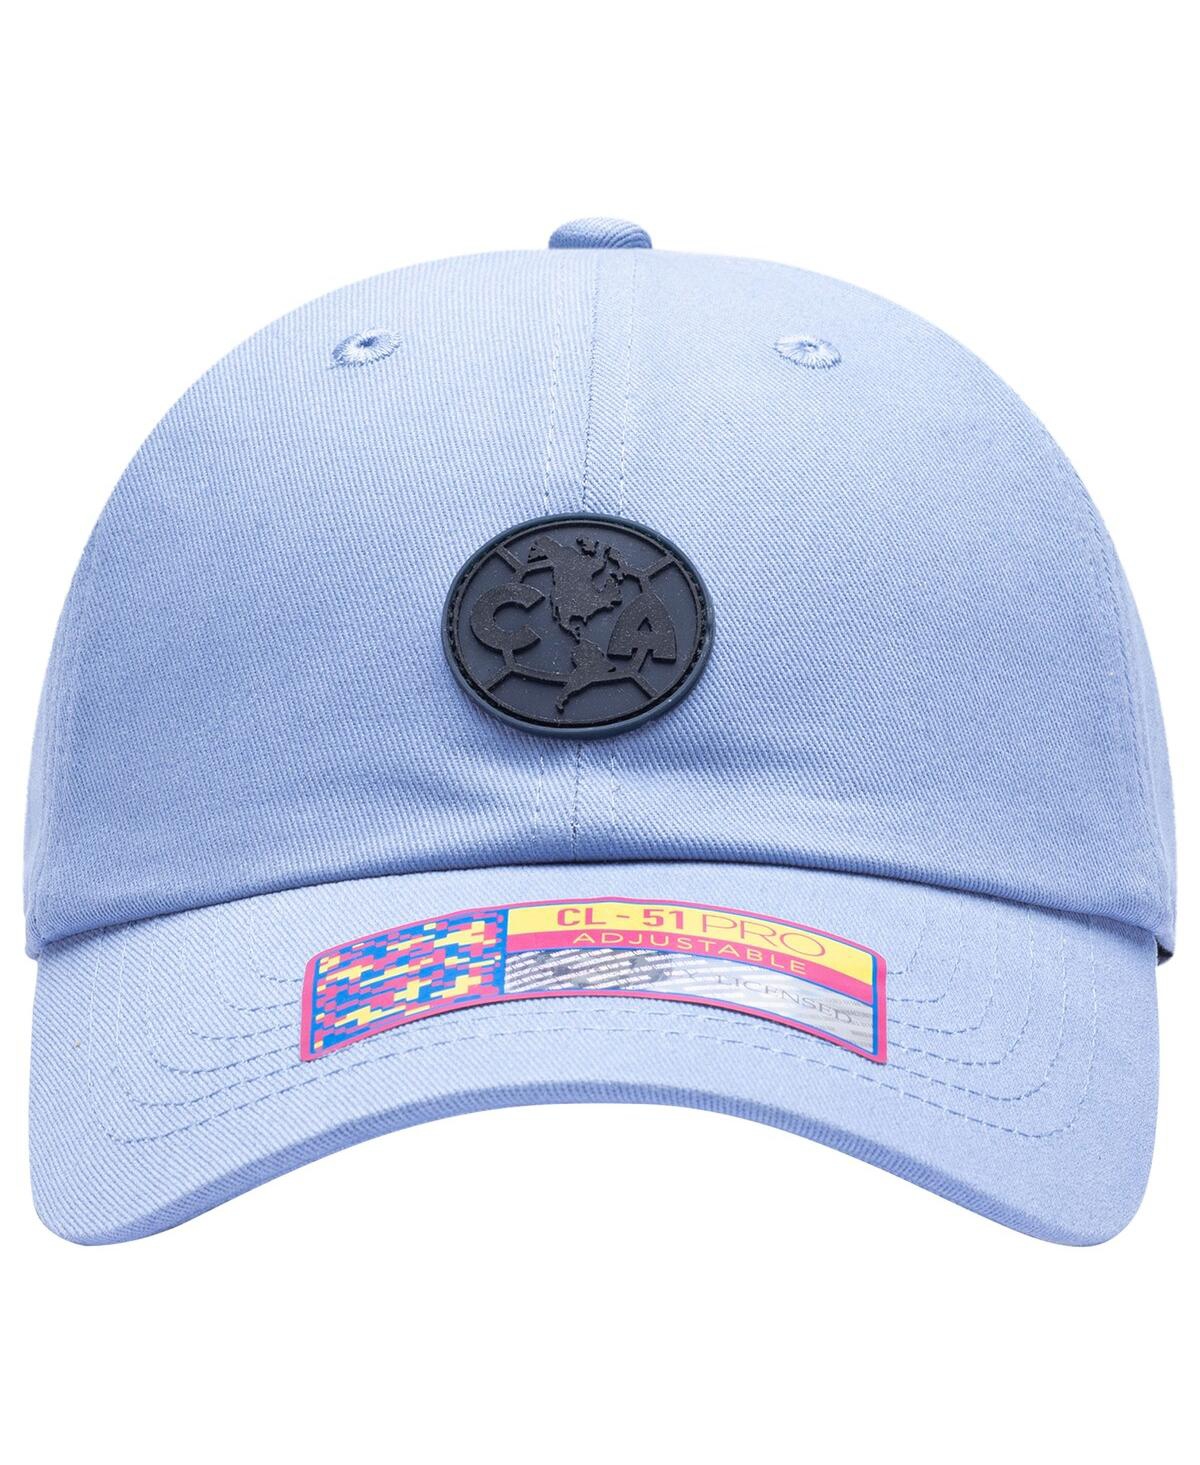 Shop Fan Ink Men's Light Blue Club America Casuals Adjustable Hat